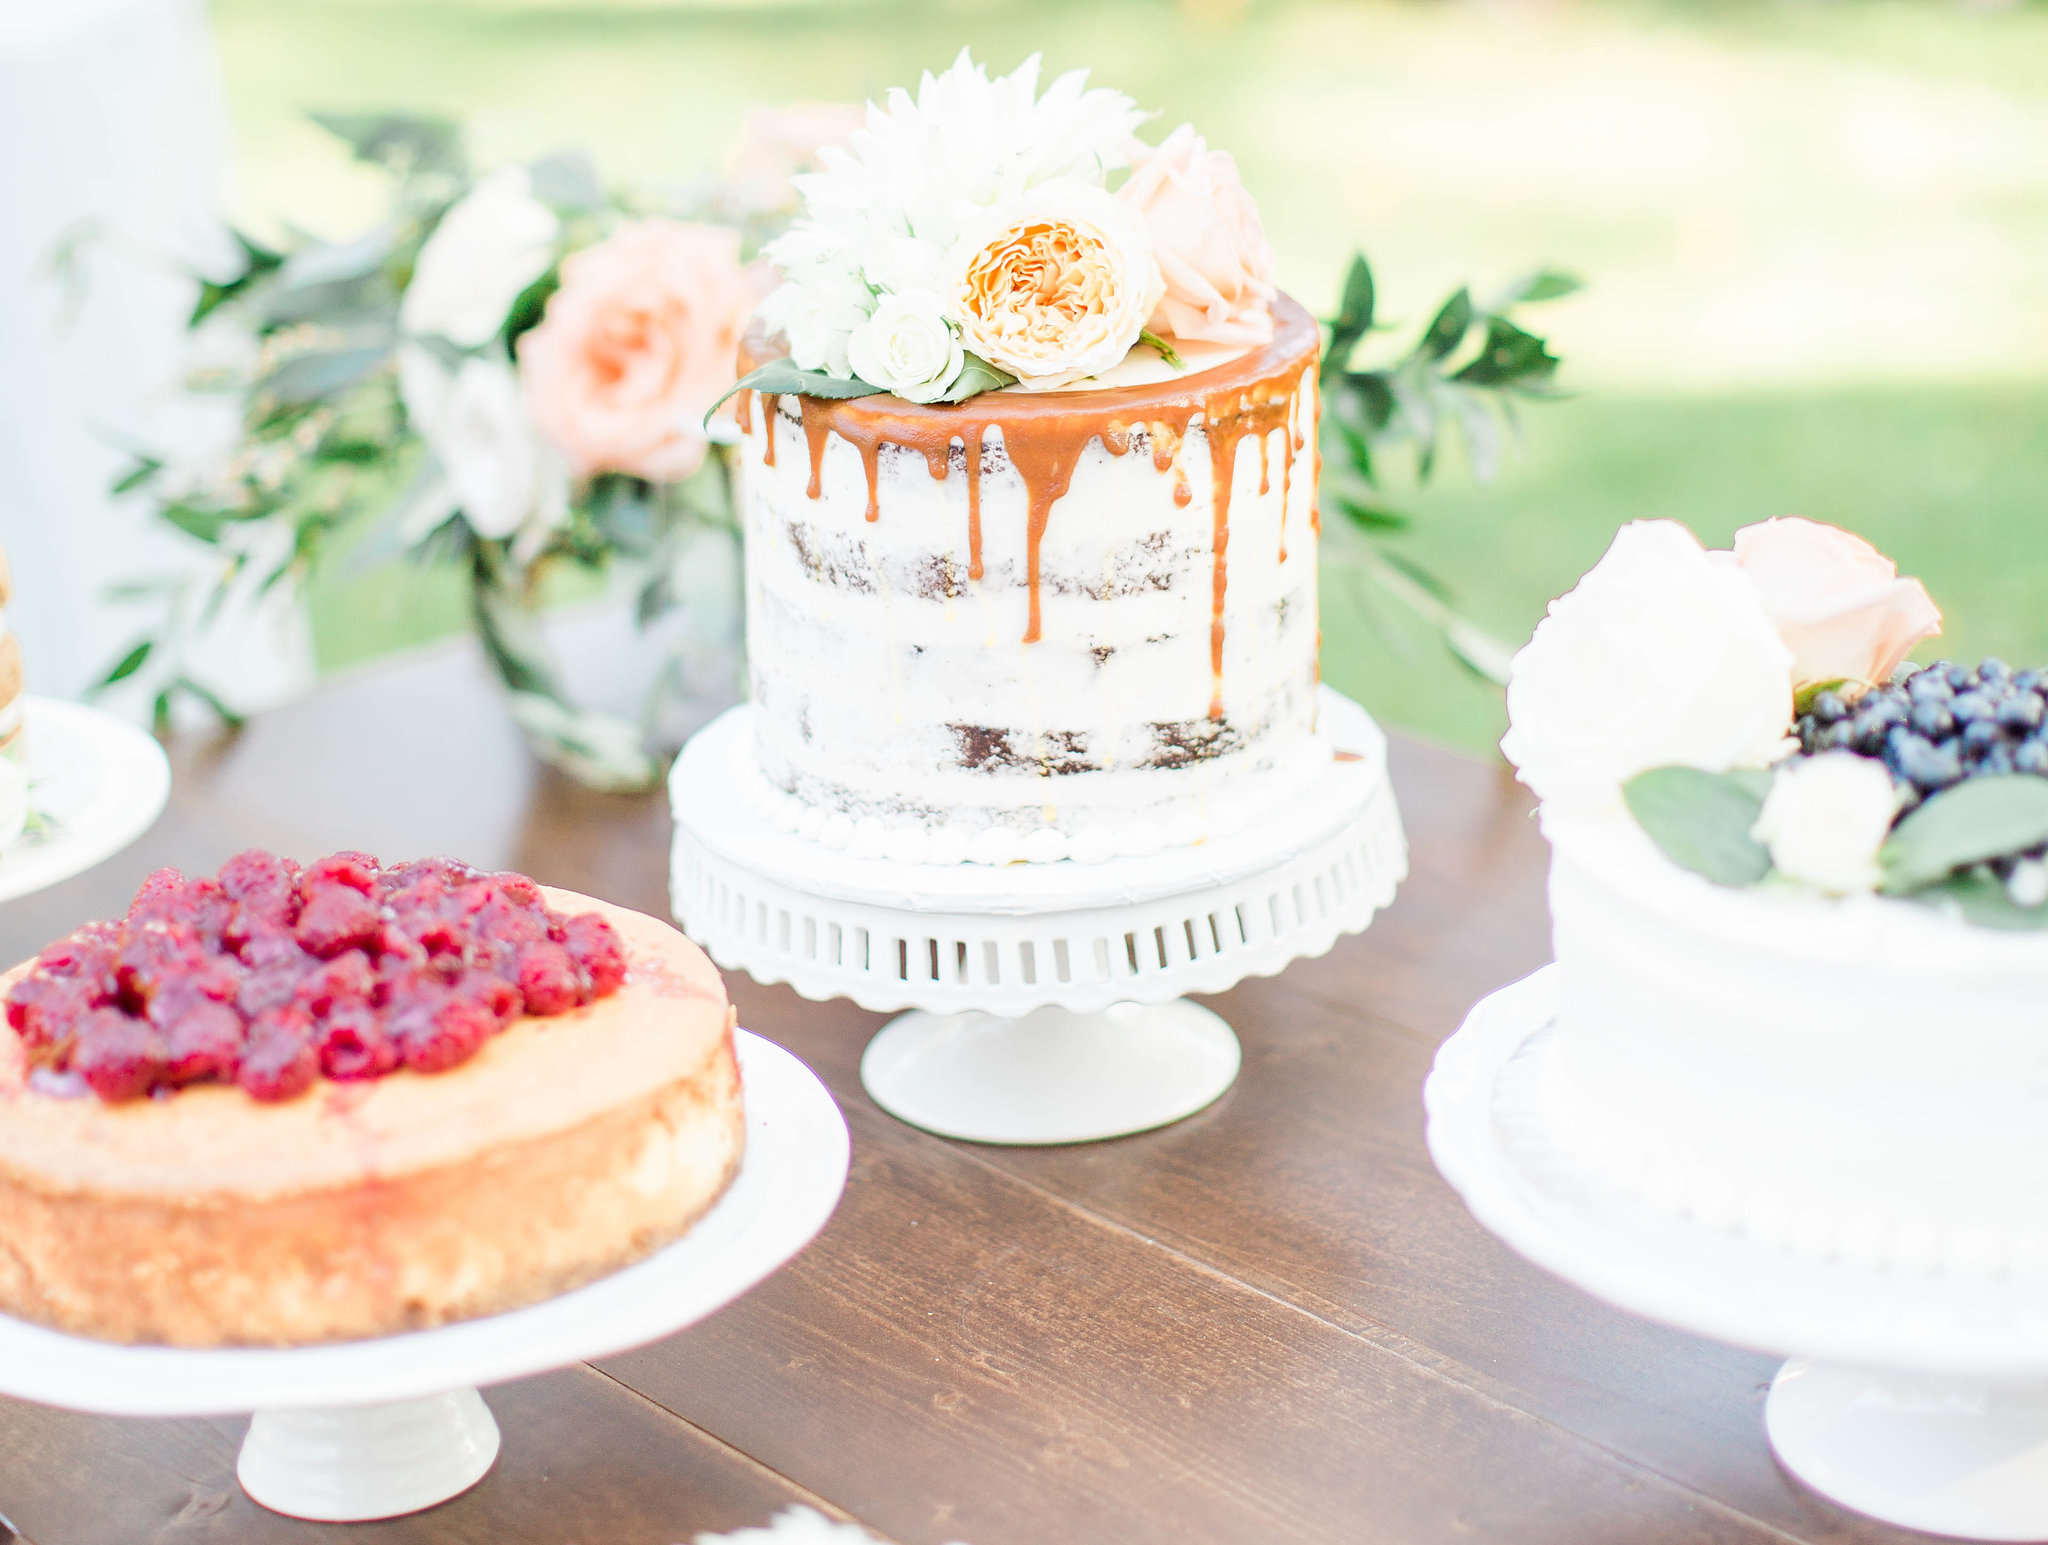 Wedding cakes by The Baker’s Rhapsody